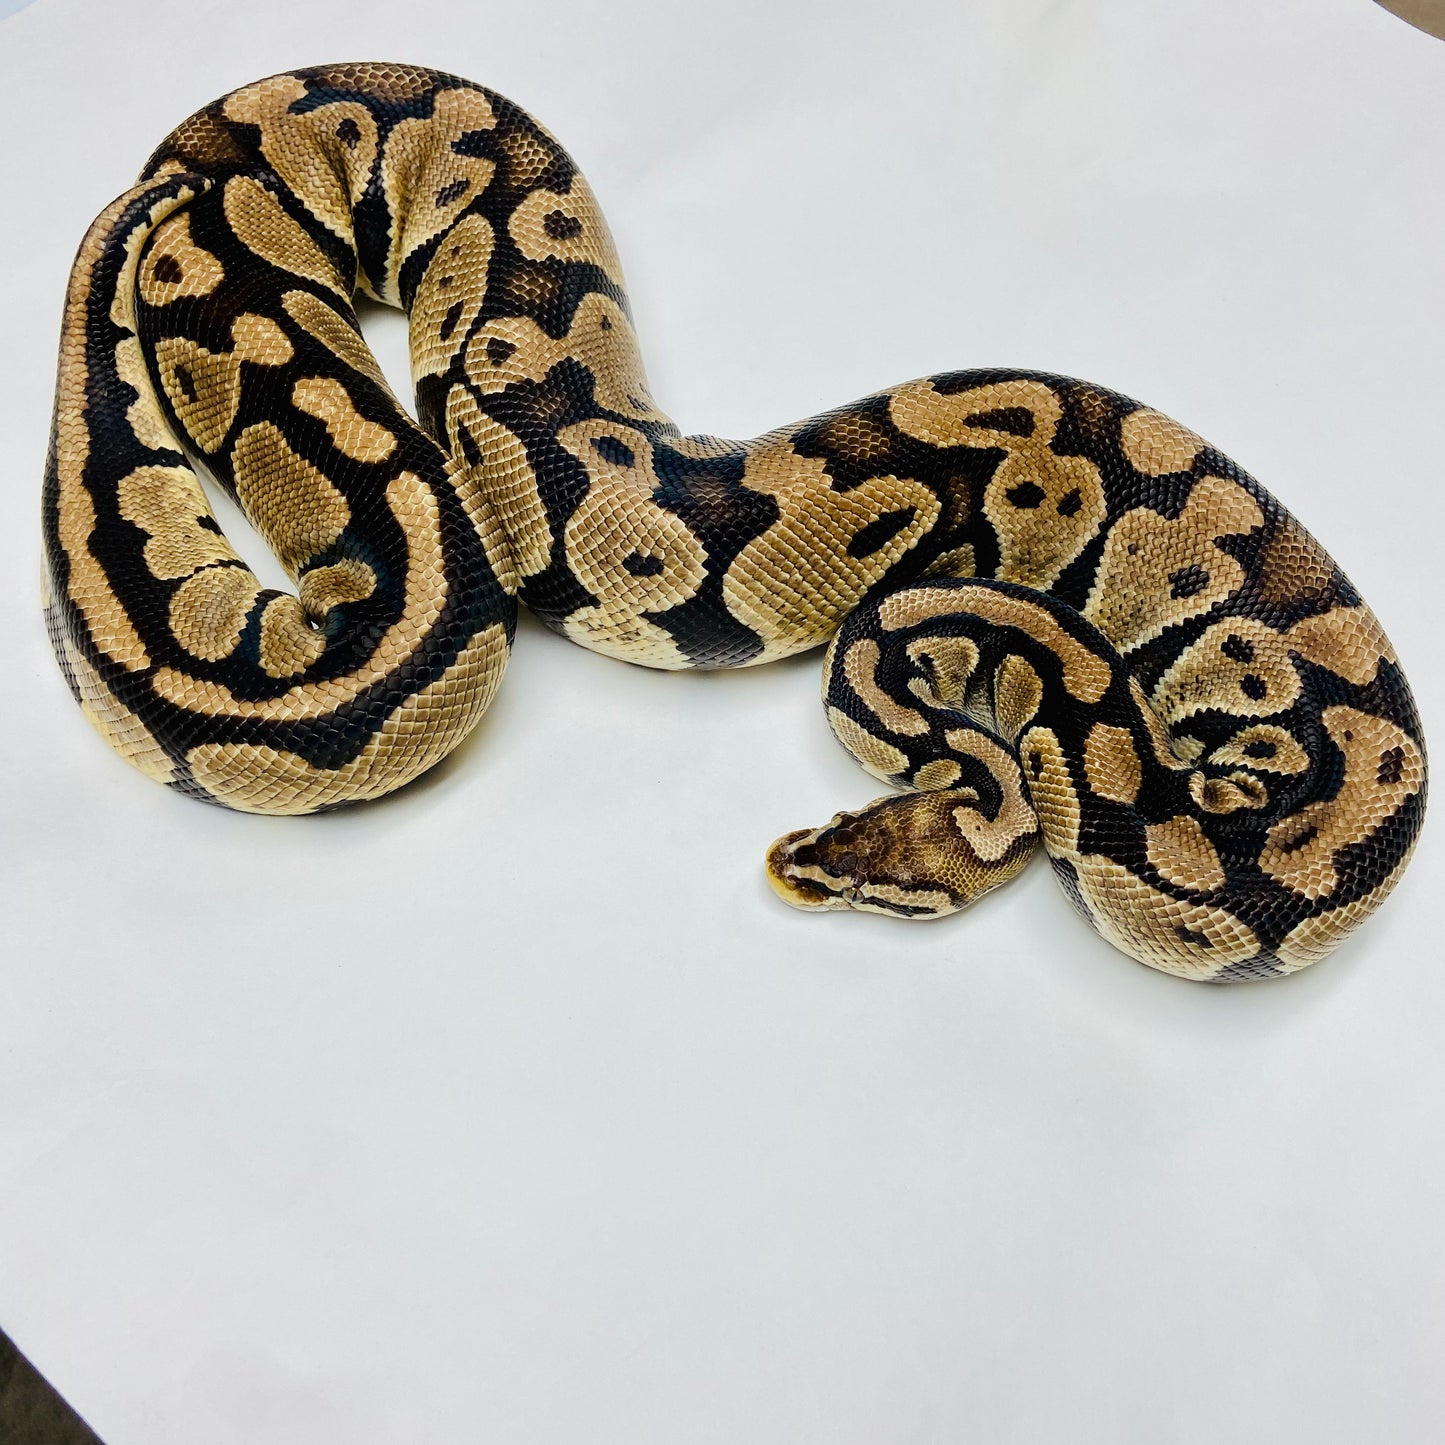 Adult Pastel Het Ghost Ball Python- Female